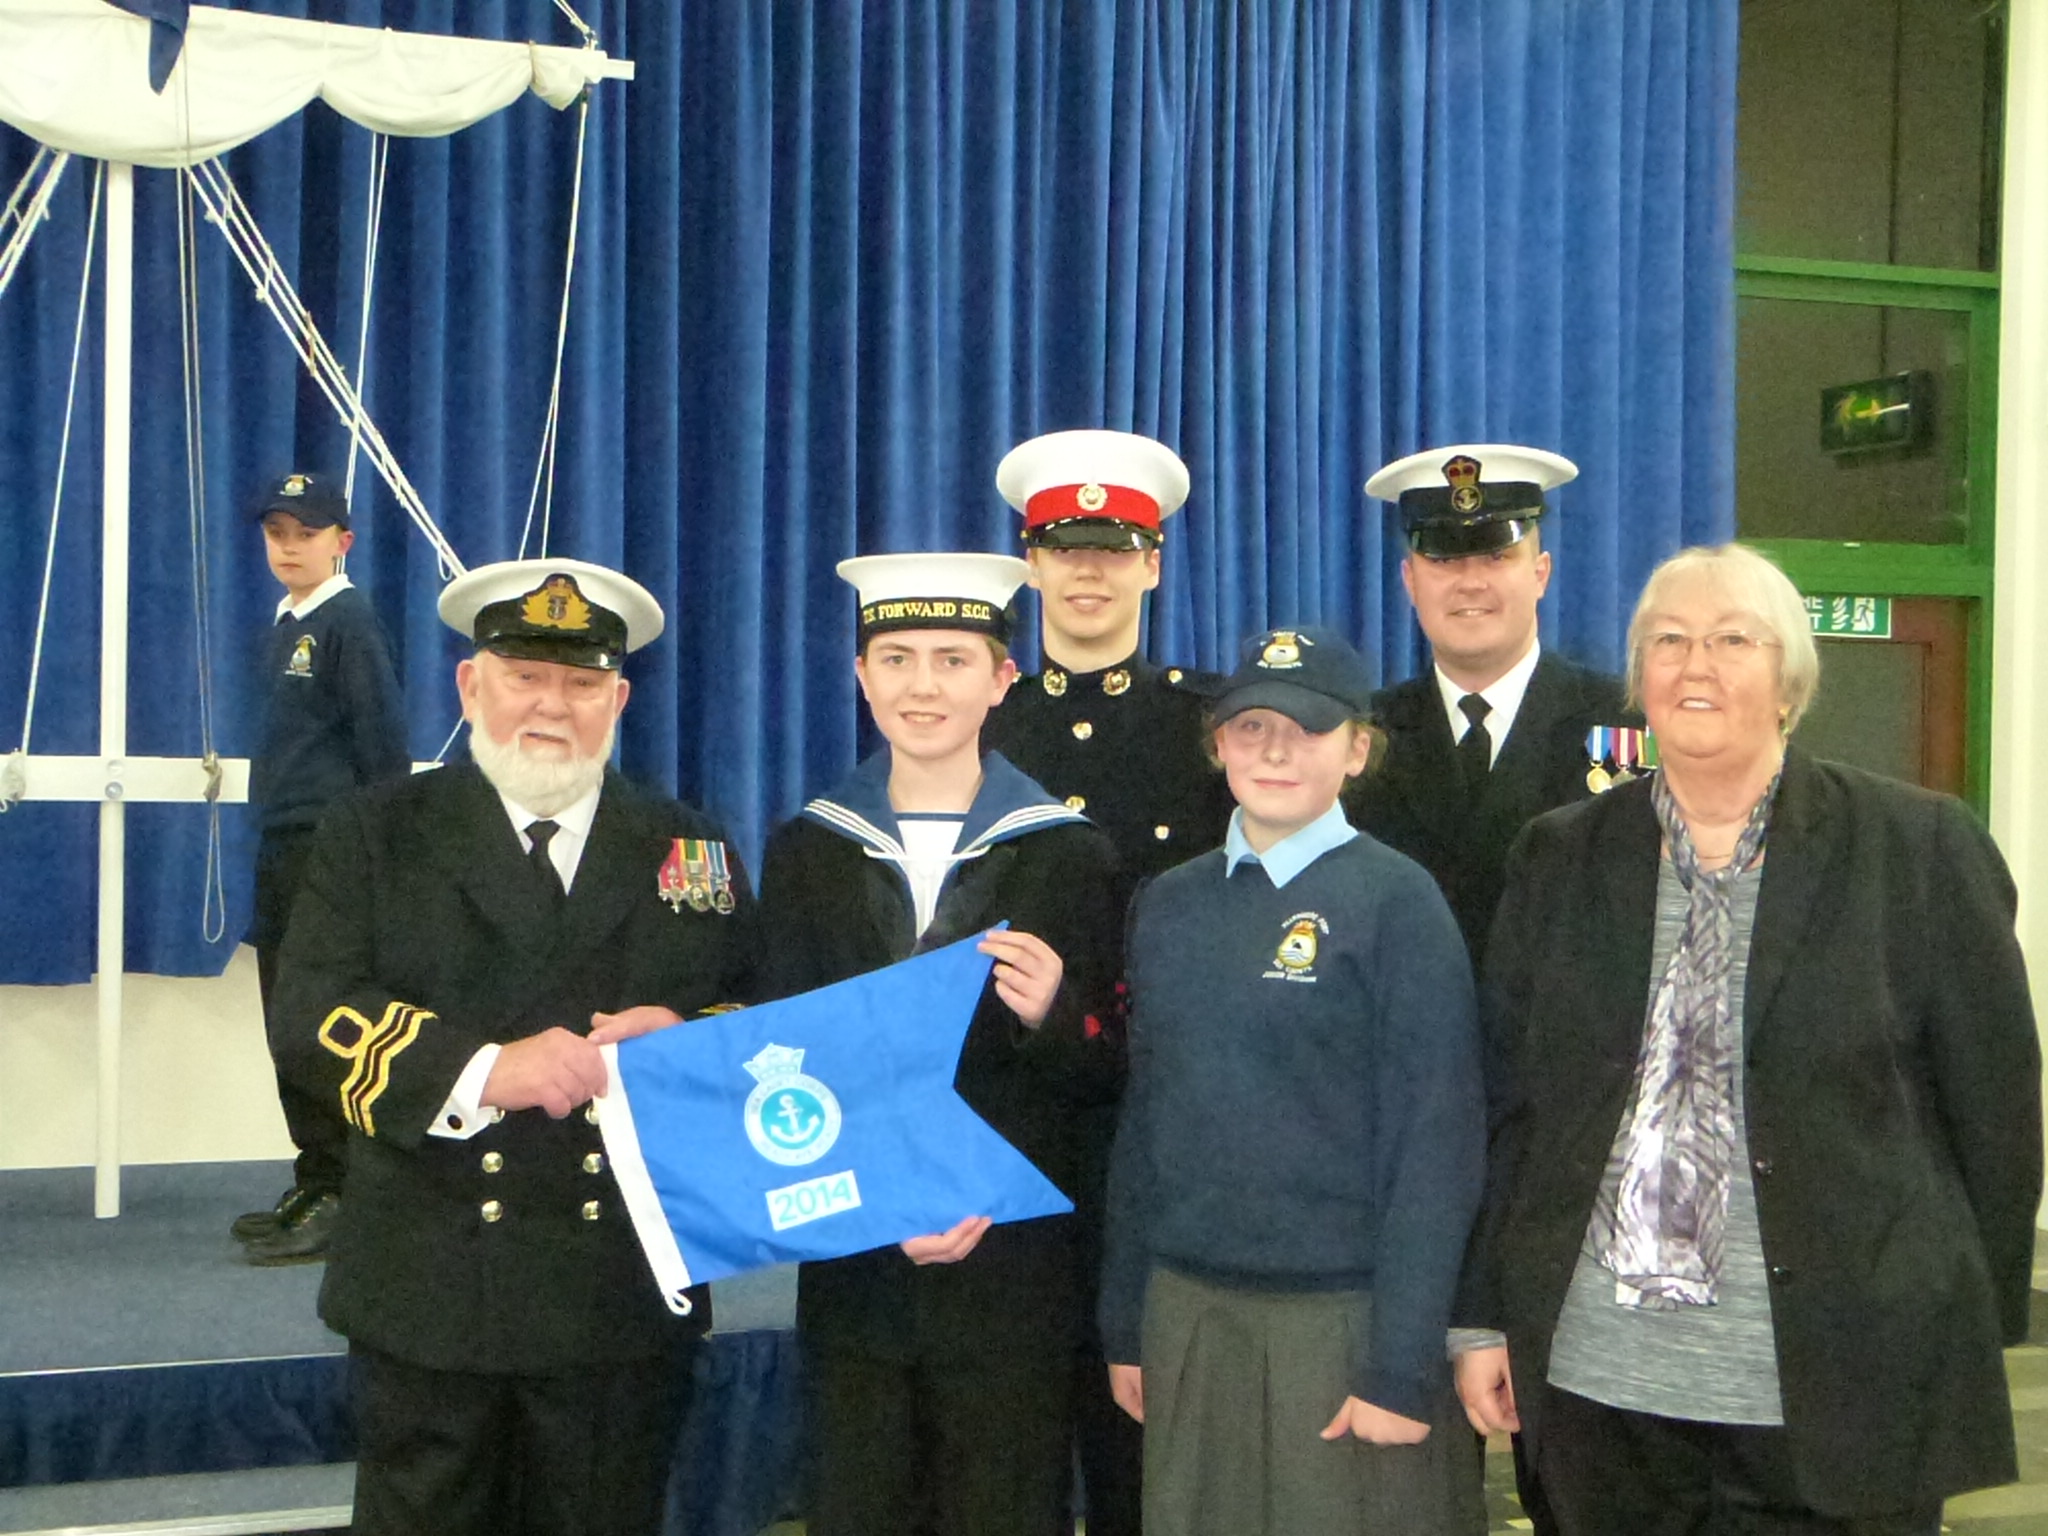 Featured image for “Ellesmere Port Sea Cadets win highest award!”